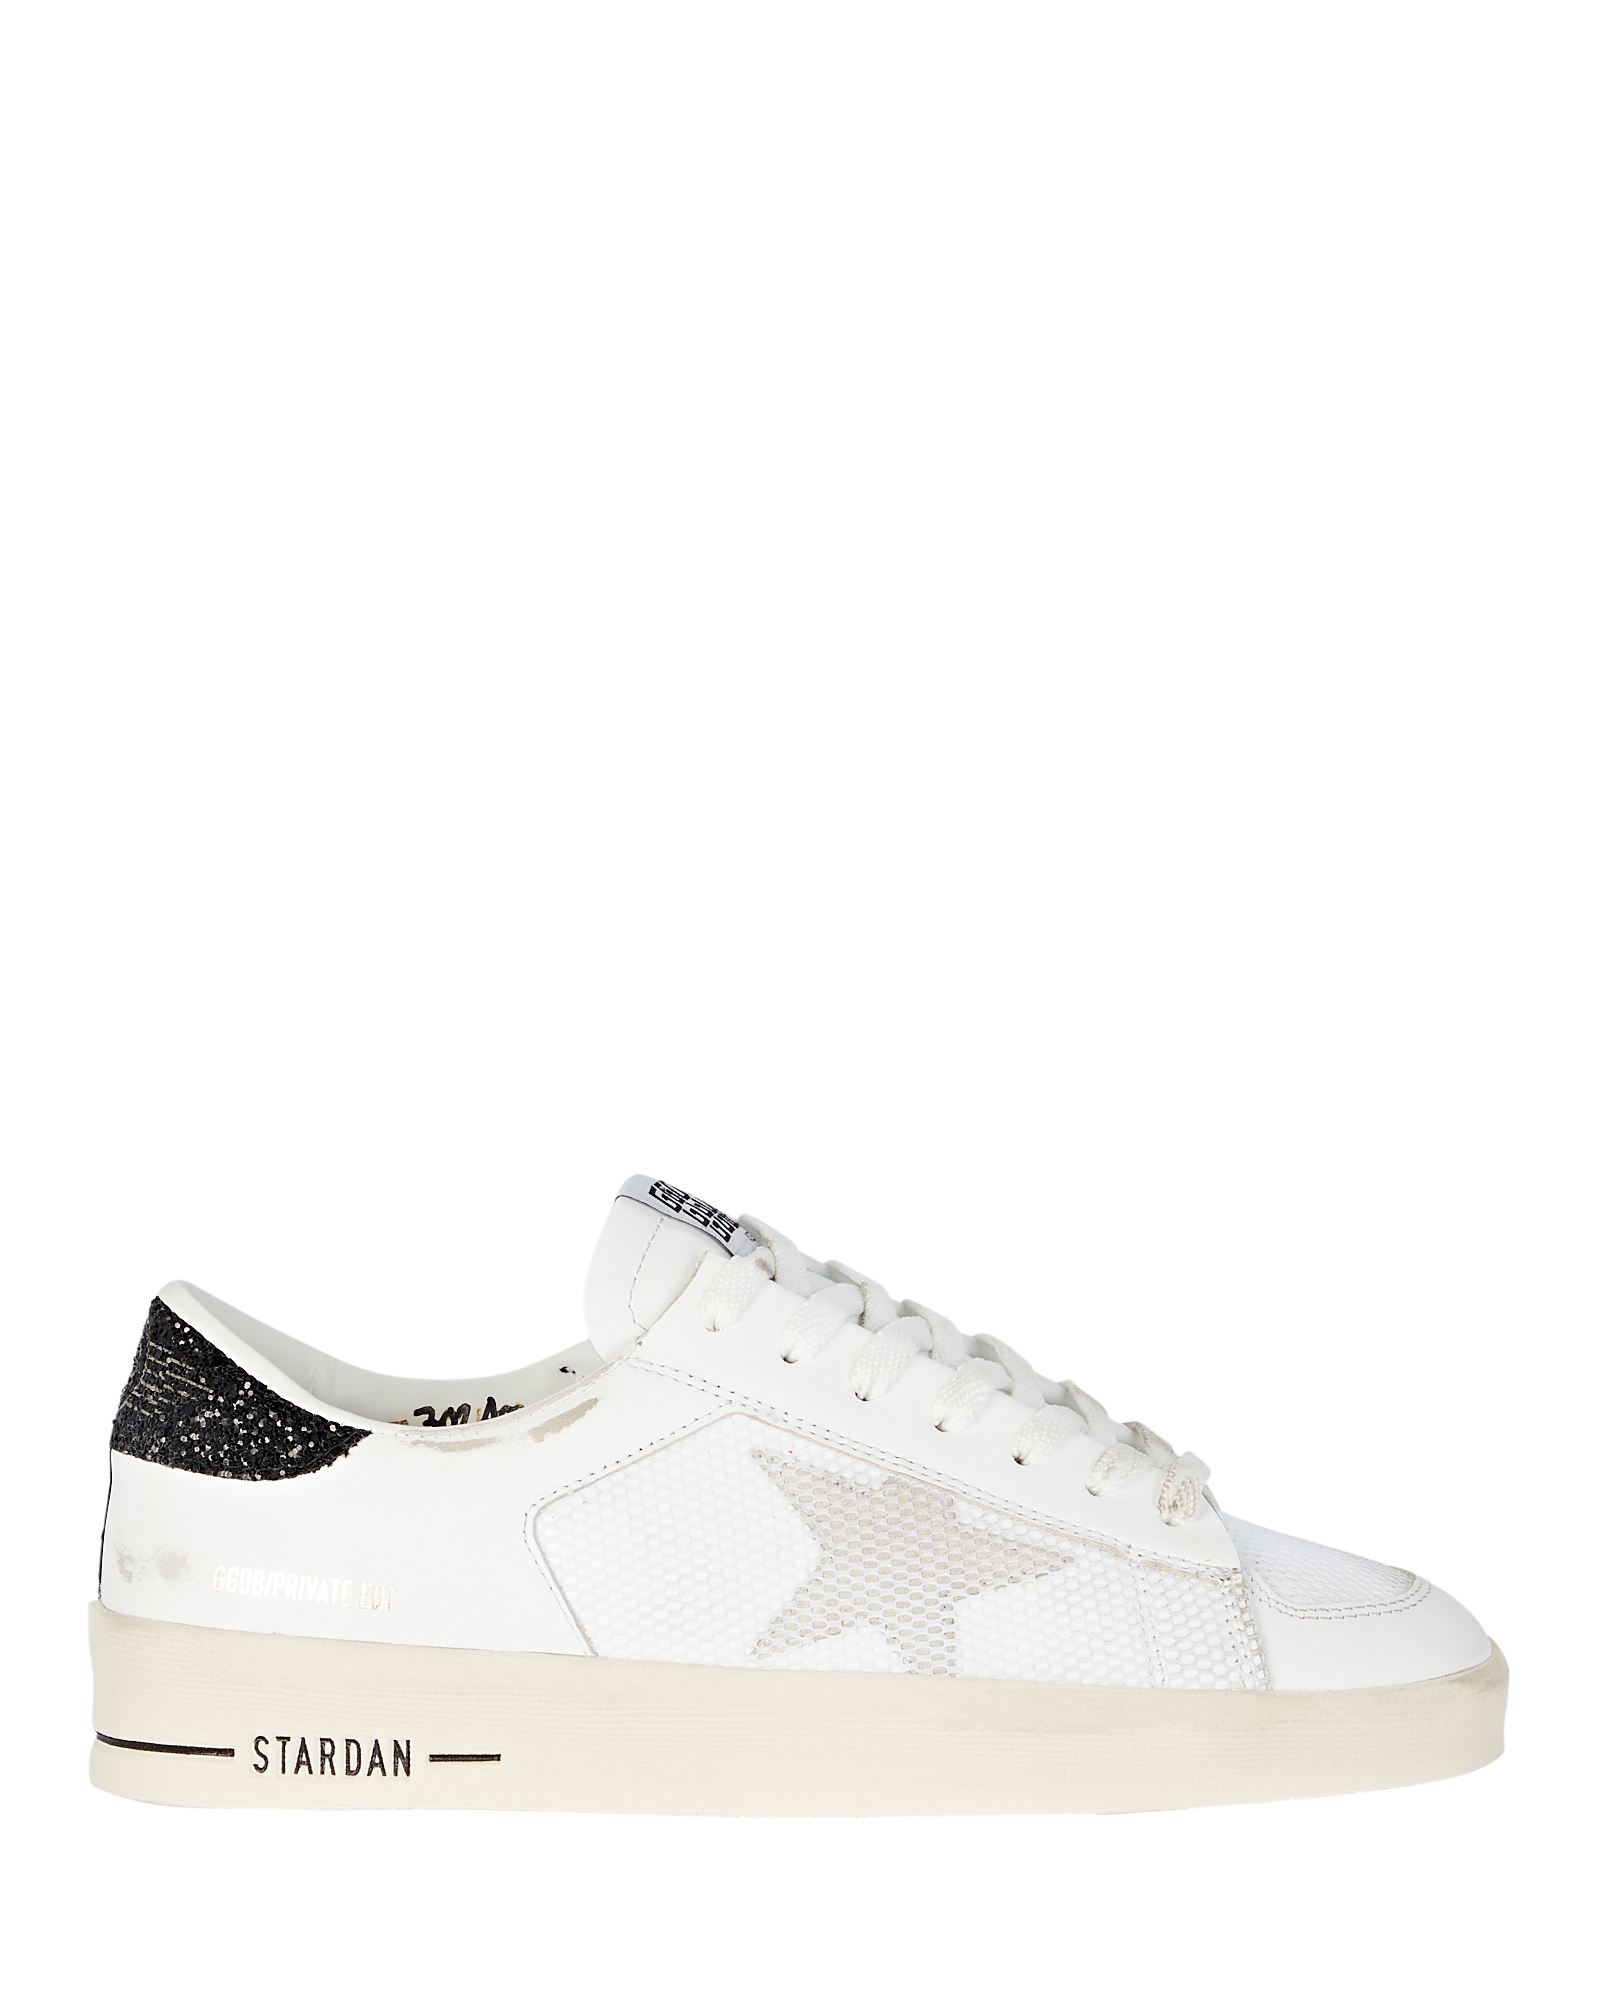 Golden Goose Stardan Sneakers In White | INTERMIX®